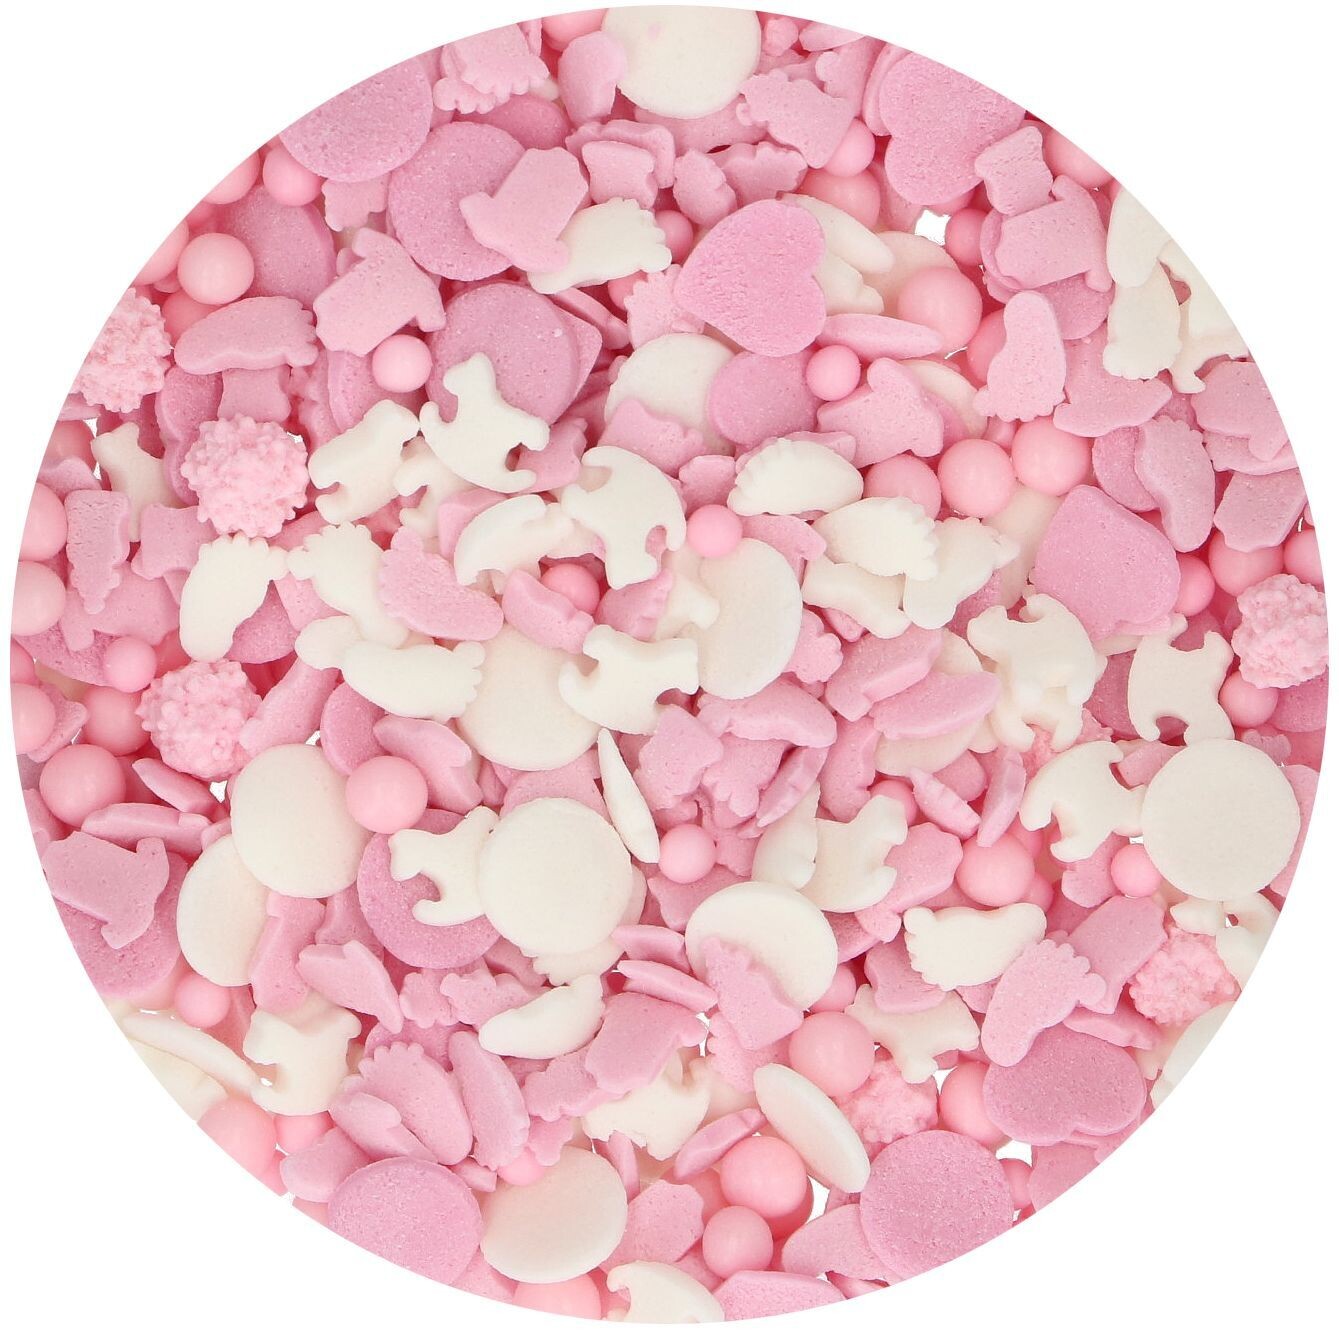 FunCakes Sprinkle Mix 50γρ -BABY PINK MEDLEY - Μείγμα  Ζαχαρωτών σε Ροζ και λευκές αποχρώσεις